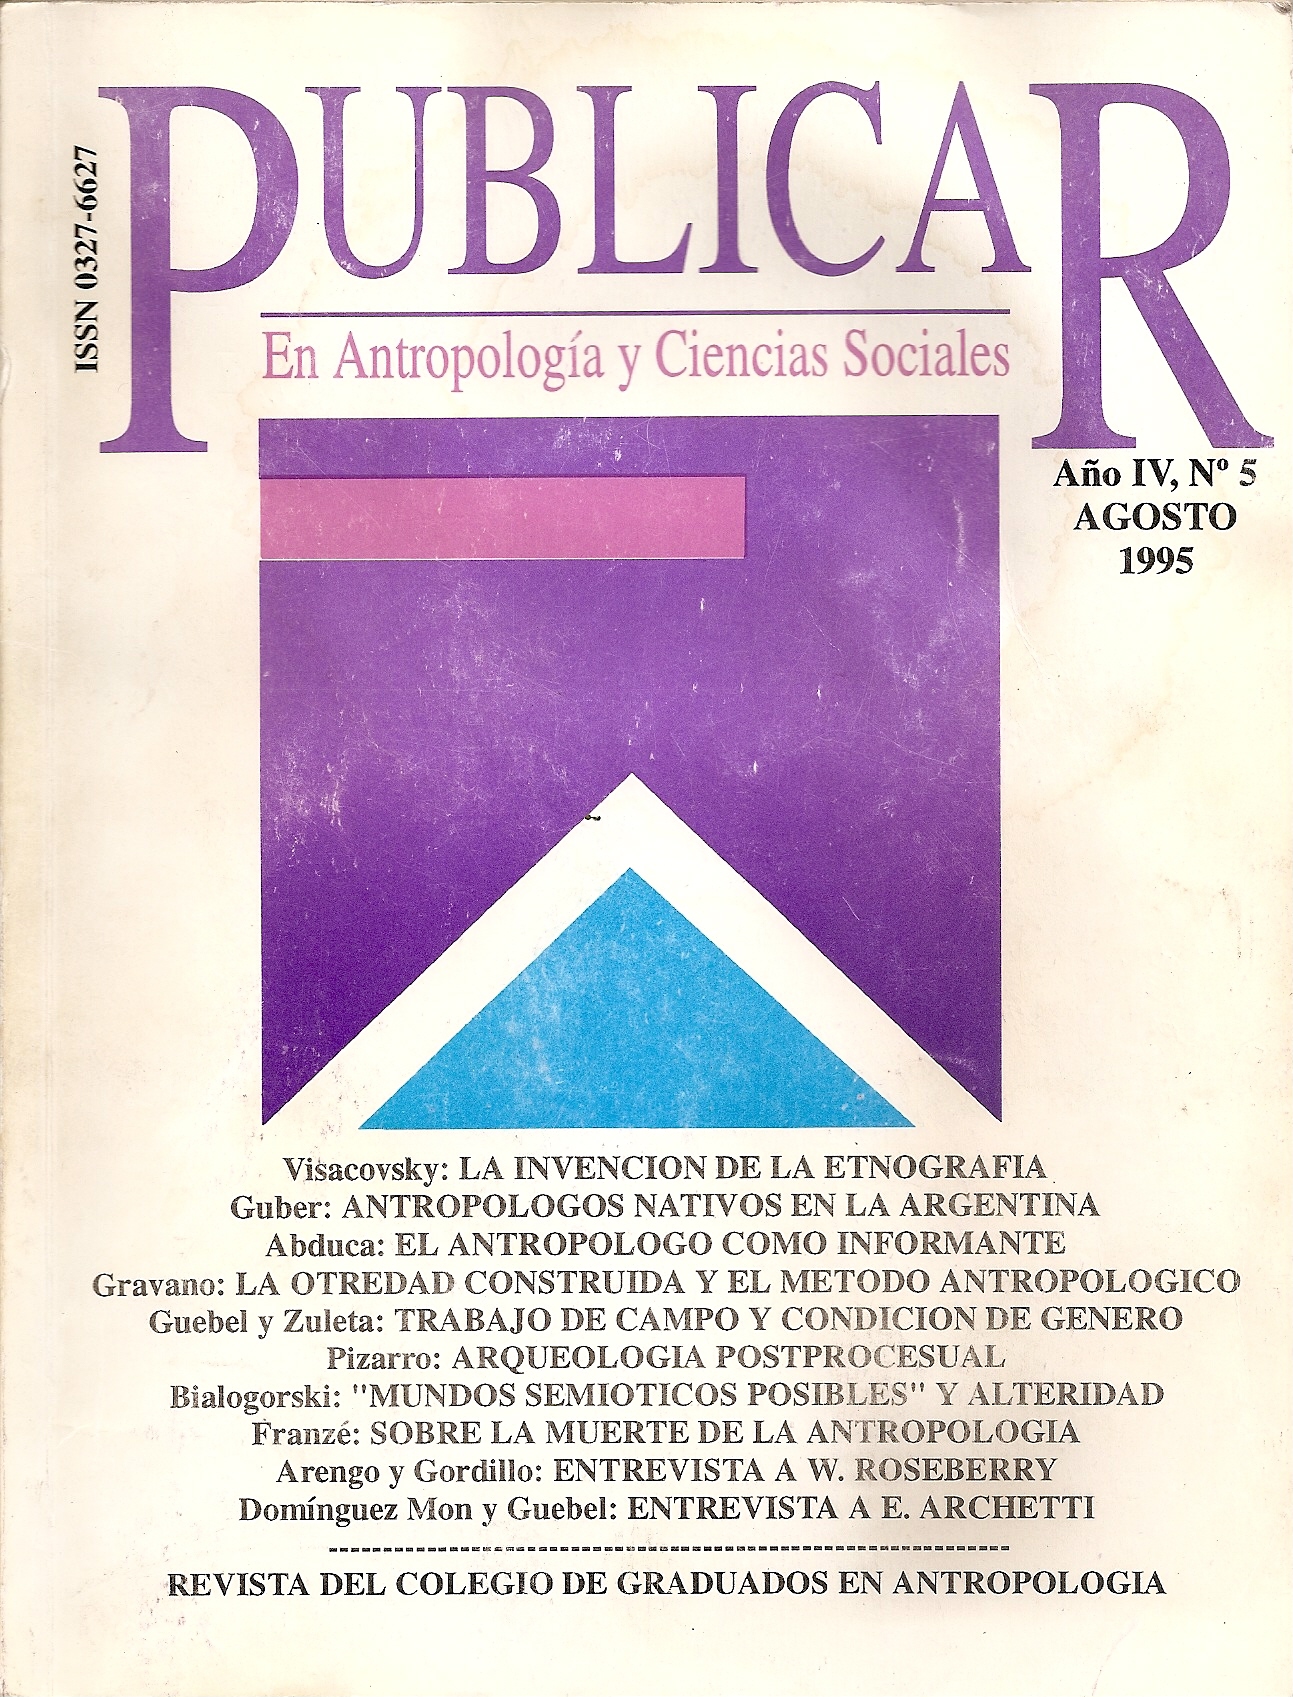 					Ver Núm. 5 (1995): PUBLICAR, año IV, nº V, agosto 1995
				